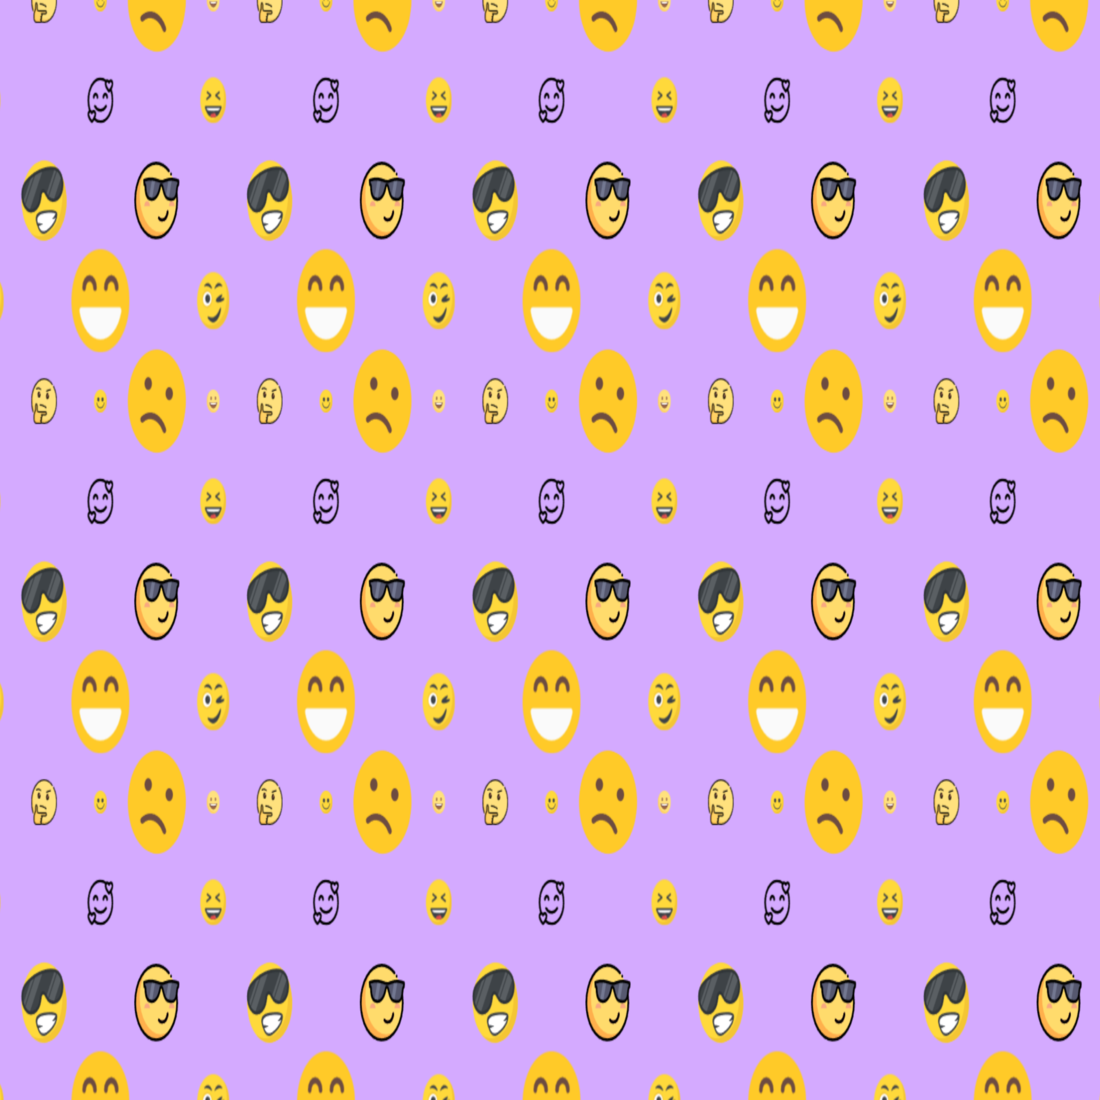 Amazing 8 Emoji Patterns cover image.